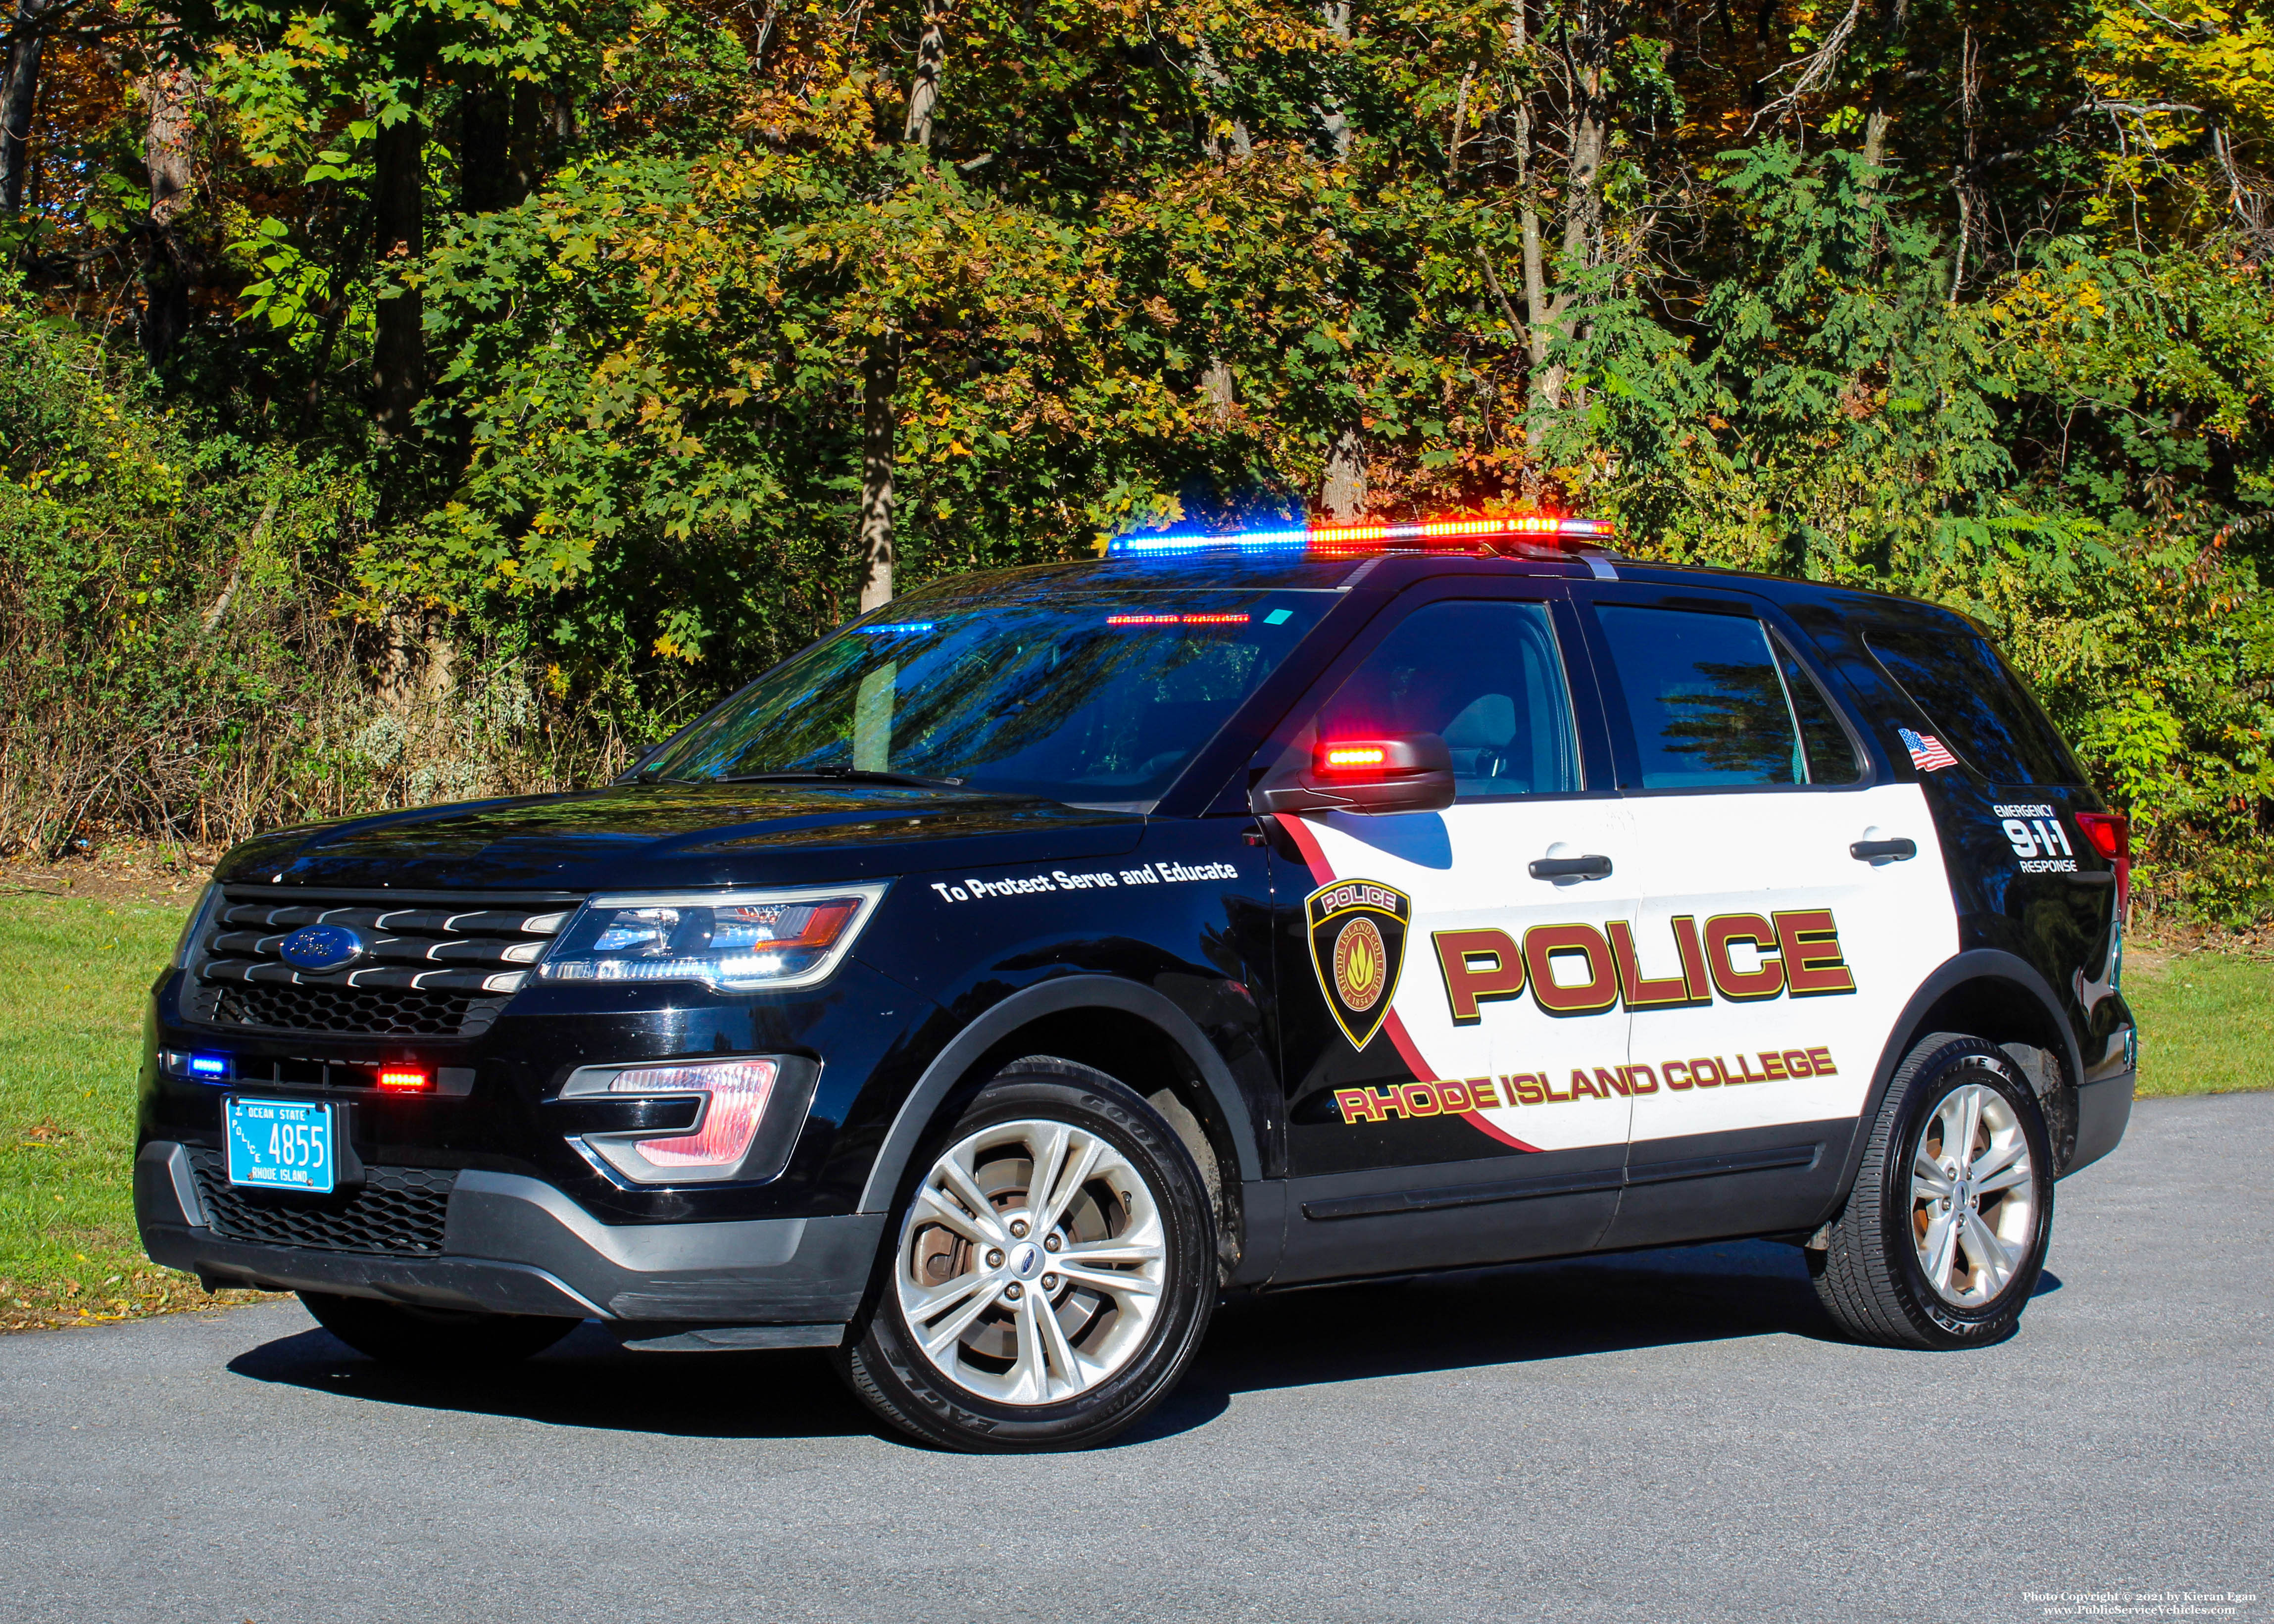 A photo  of Rhode Island College Police
            Cruiser 4855, a 2017-2018 Ford Police Interceptor Utility             taken by Kieran Egan